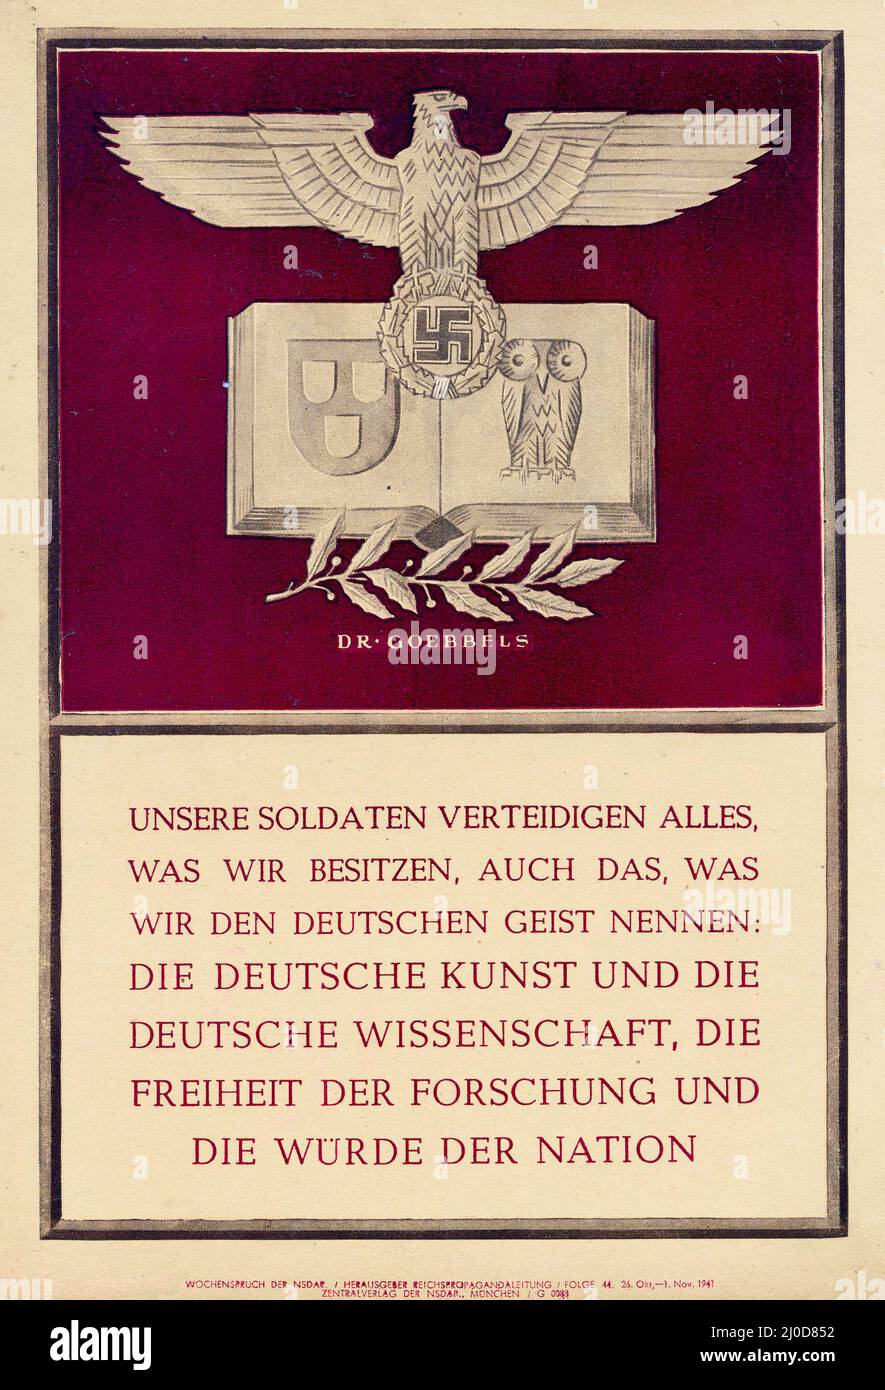 Propagande nazie allemande - slogan hebdomadaire du NSDAP - Wochenspruch der NSDAP 26 octobre 1941 Banque D'Images